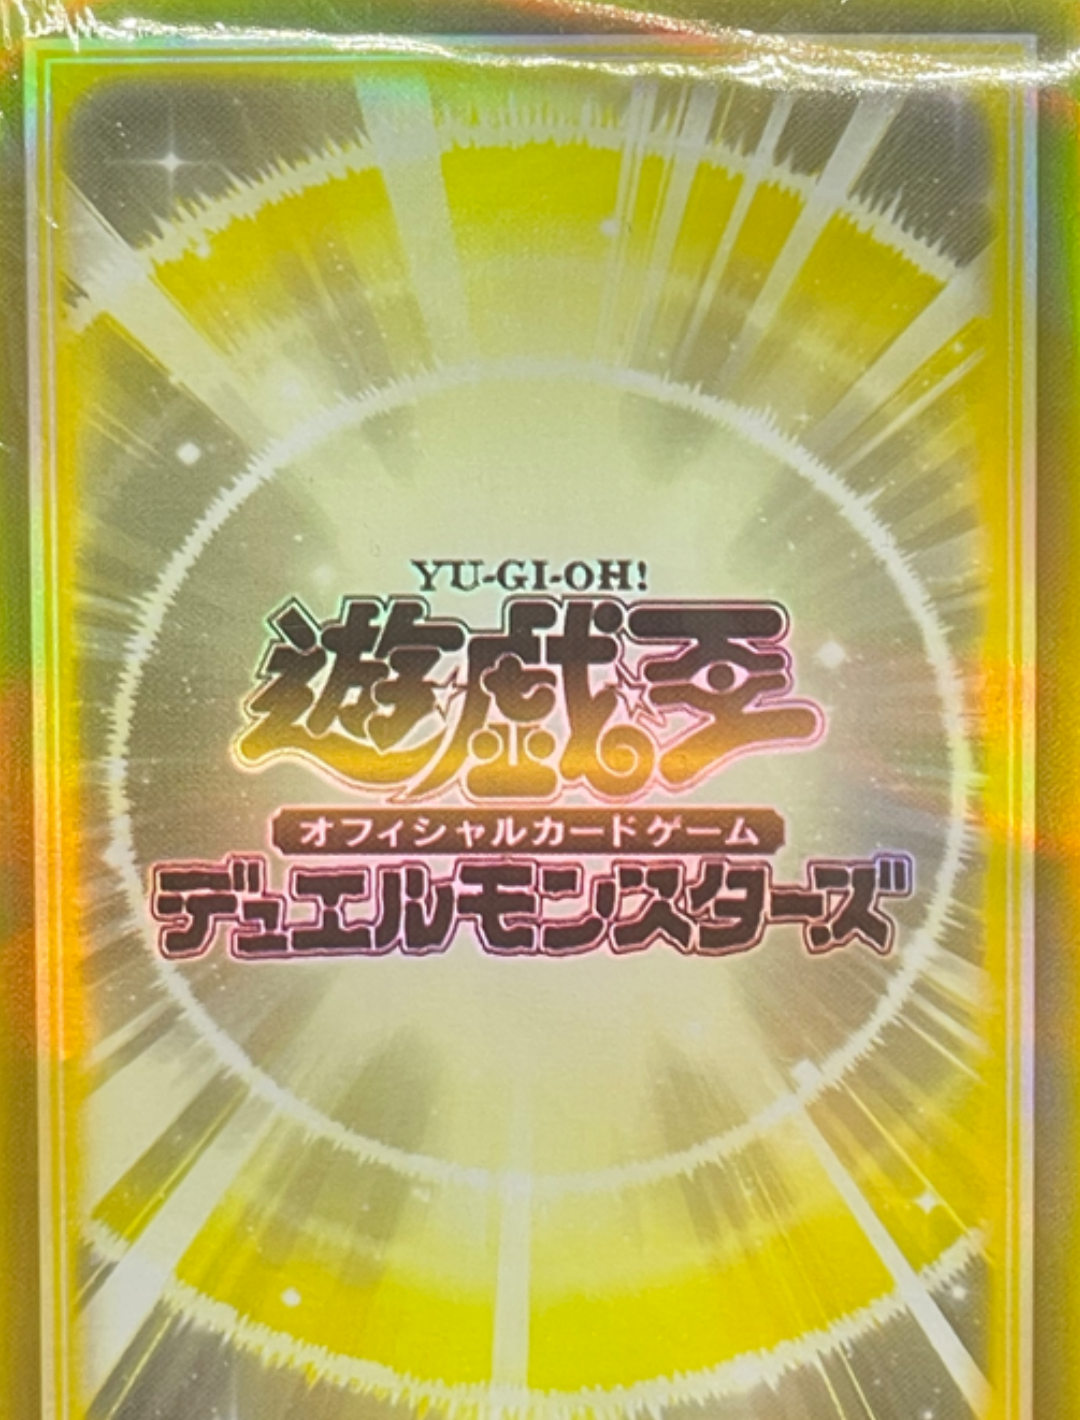 Yu-Gi-Oh! Card Sleeves - Light (70 STK) - sleevechief